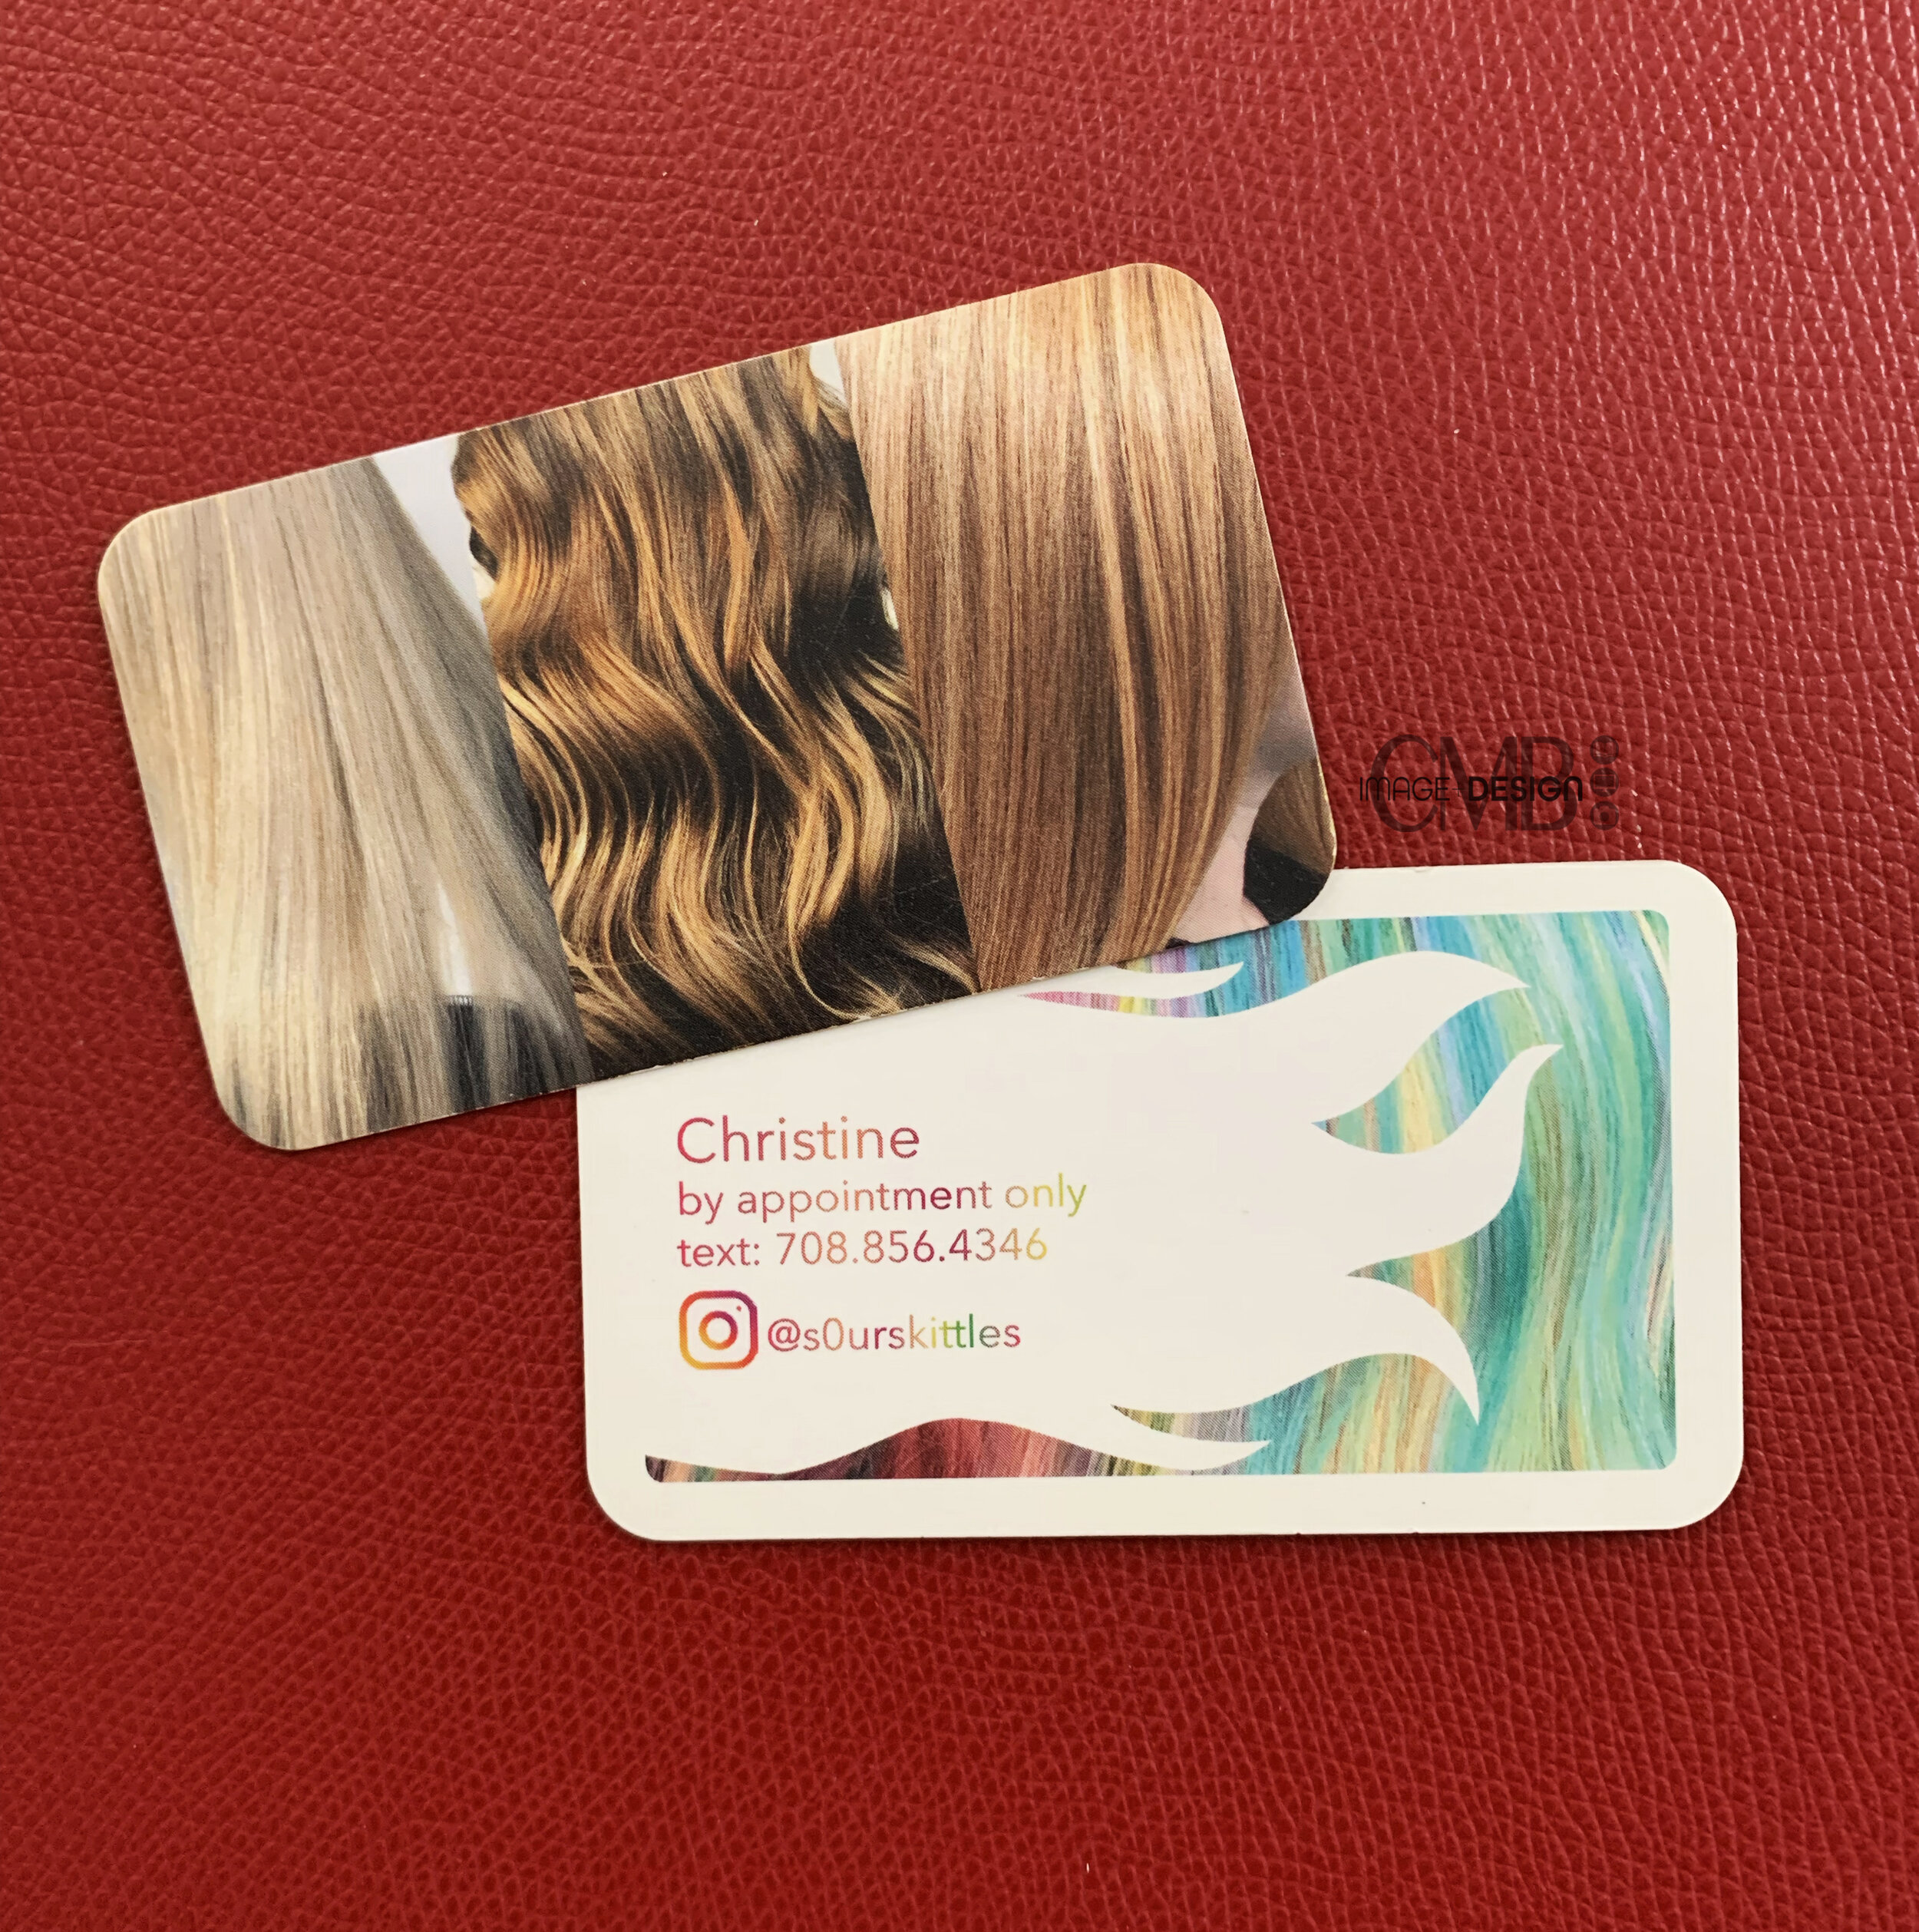 Christine Card Enviro-1.jpg